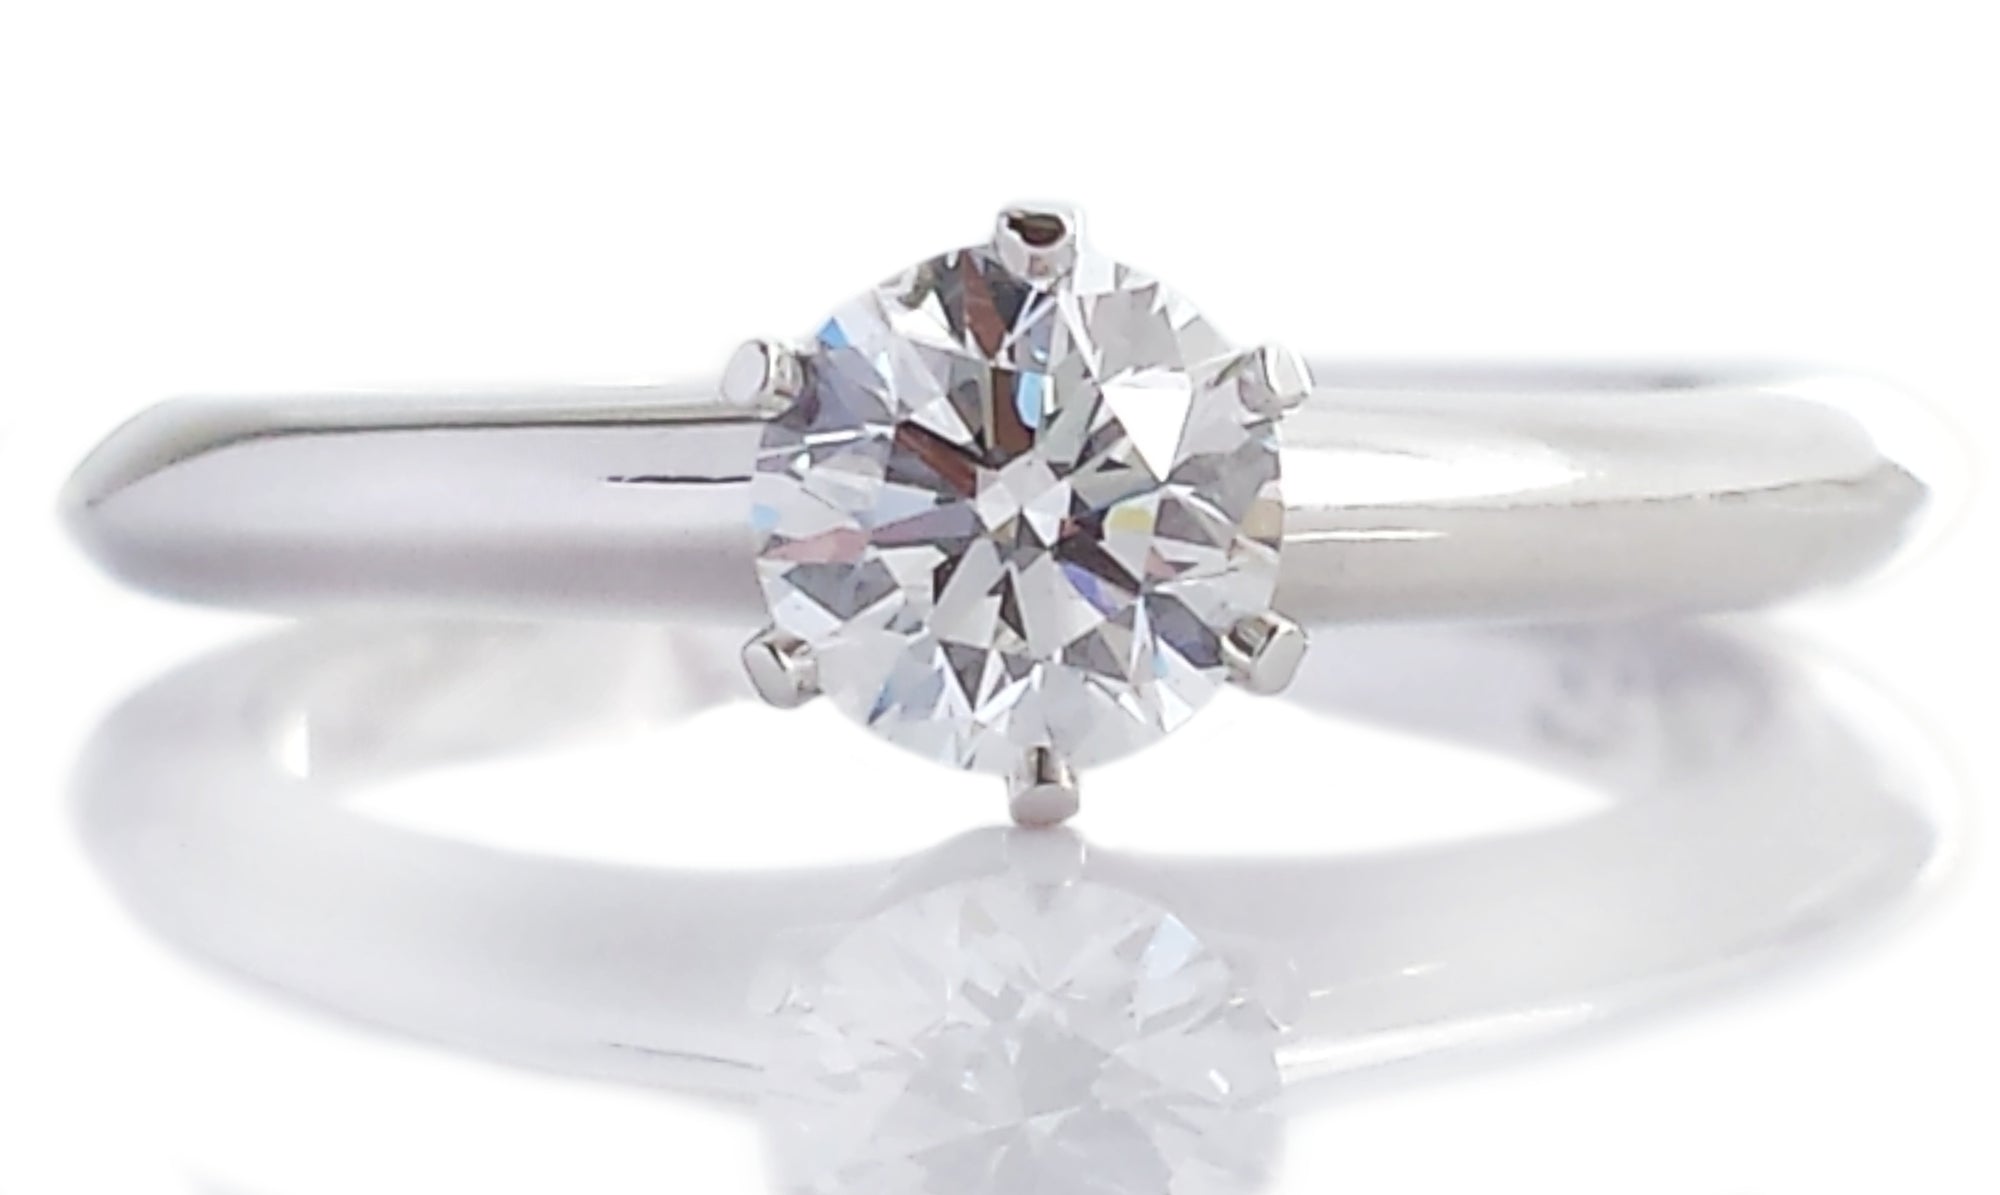 Tiffany & Co. 0.31ct G/VS Round Brilliant Cut Diamond Engagement Ring